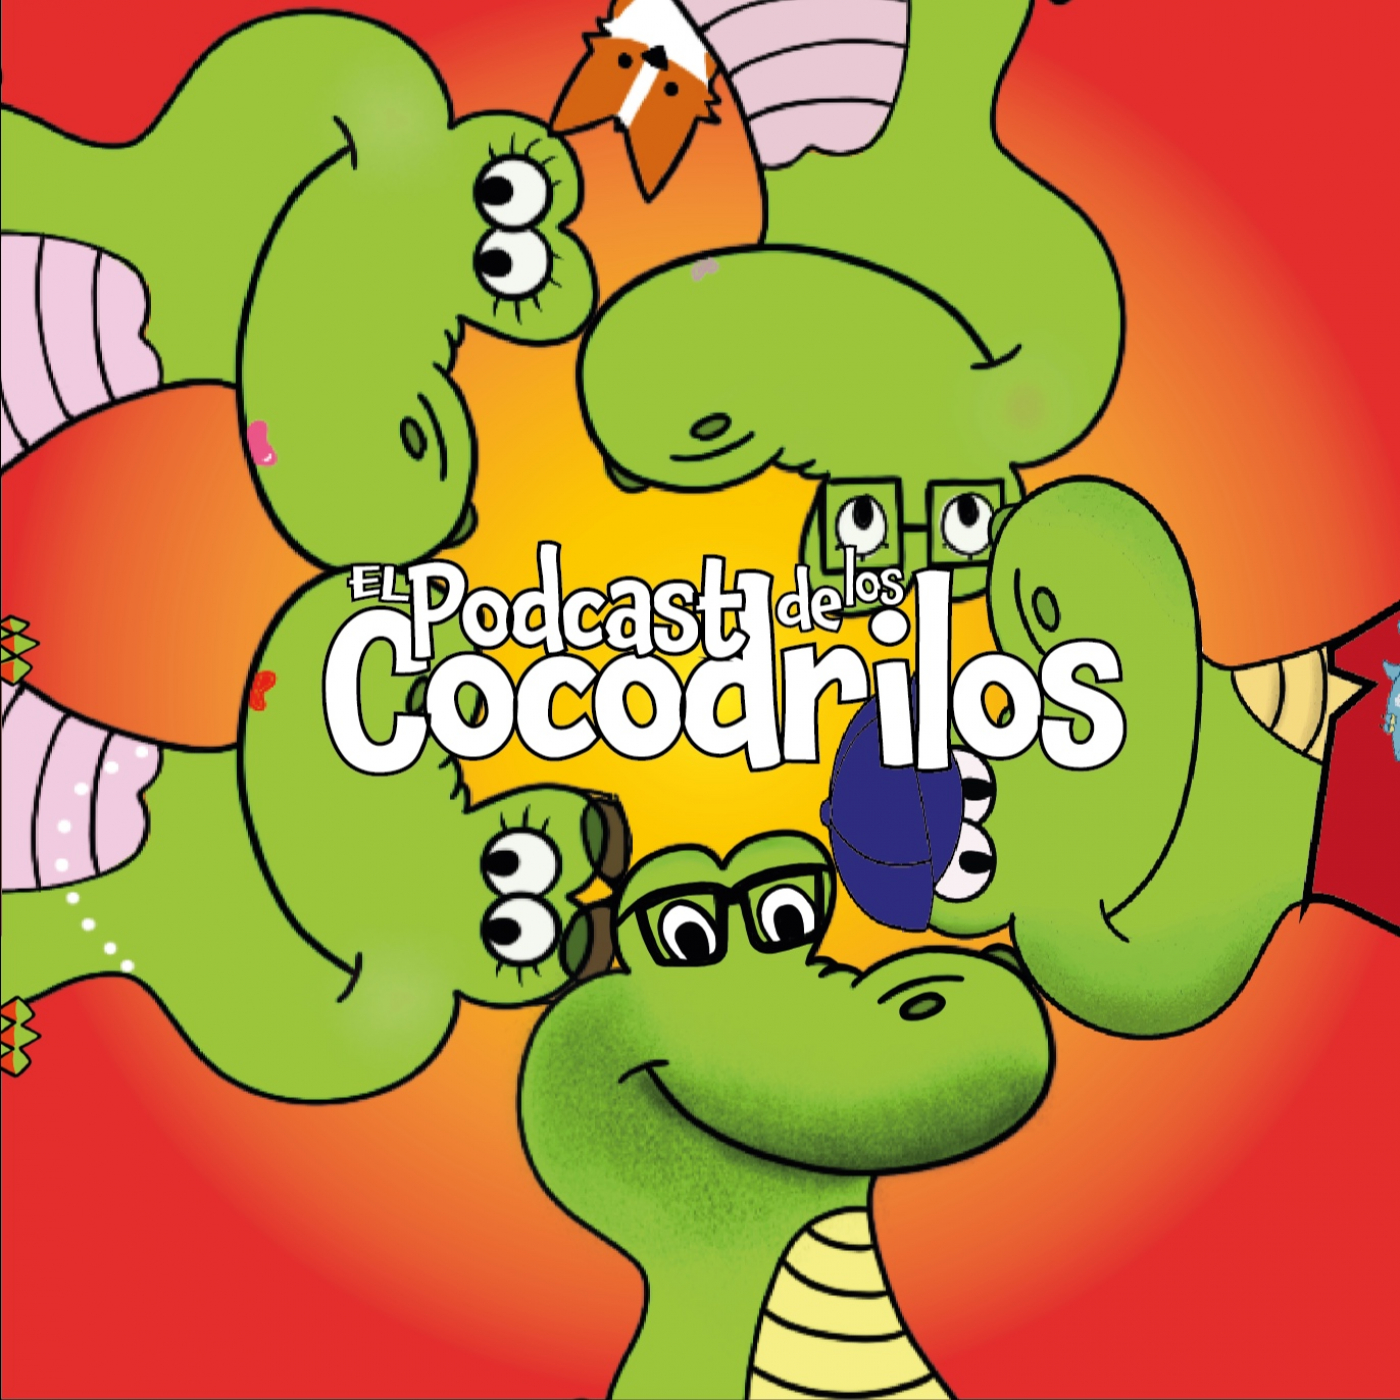 Cocodrilos Podcast